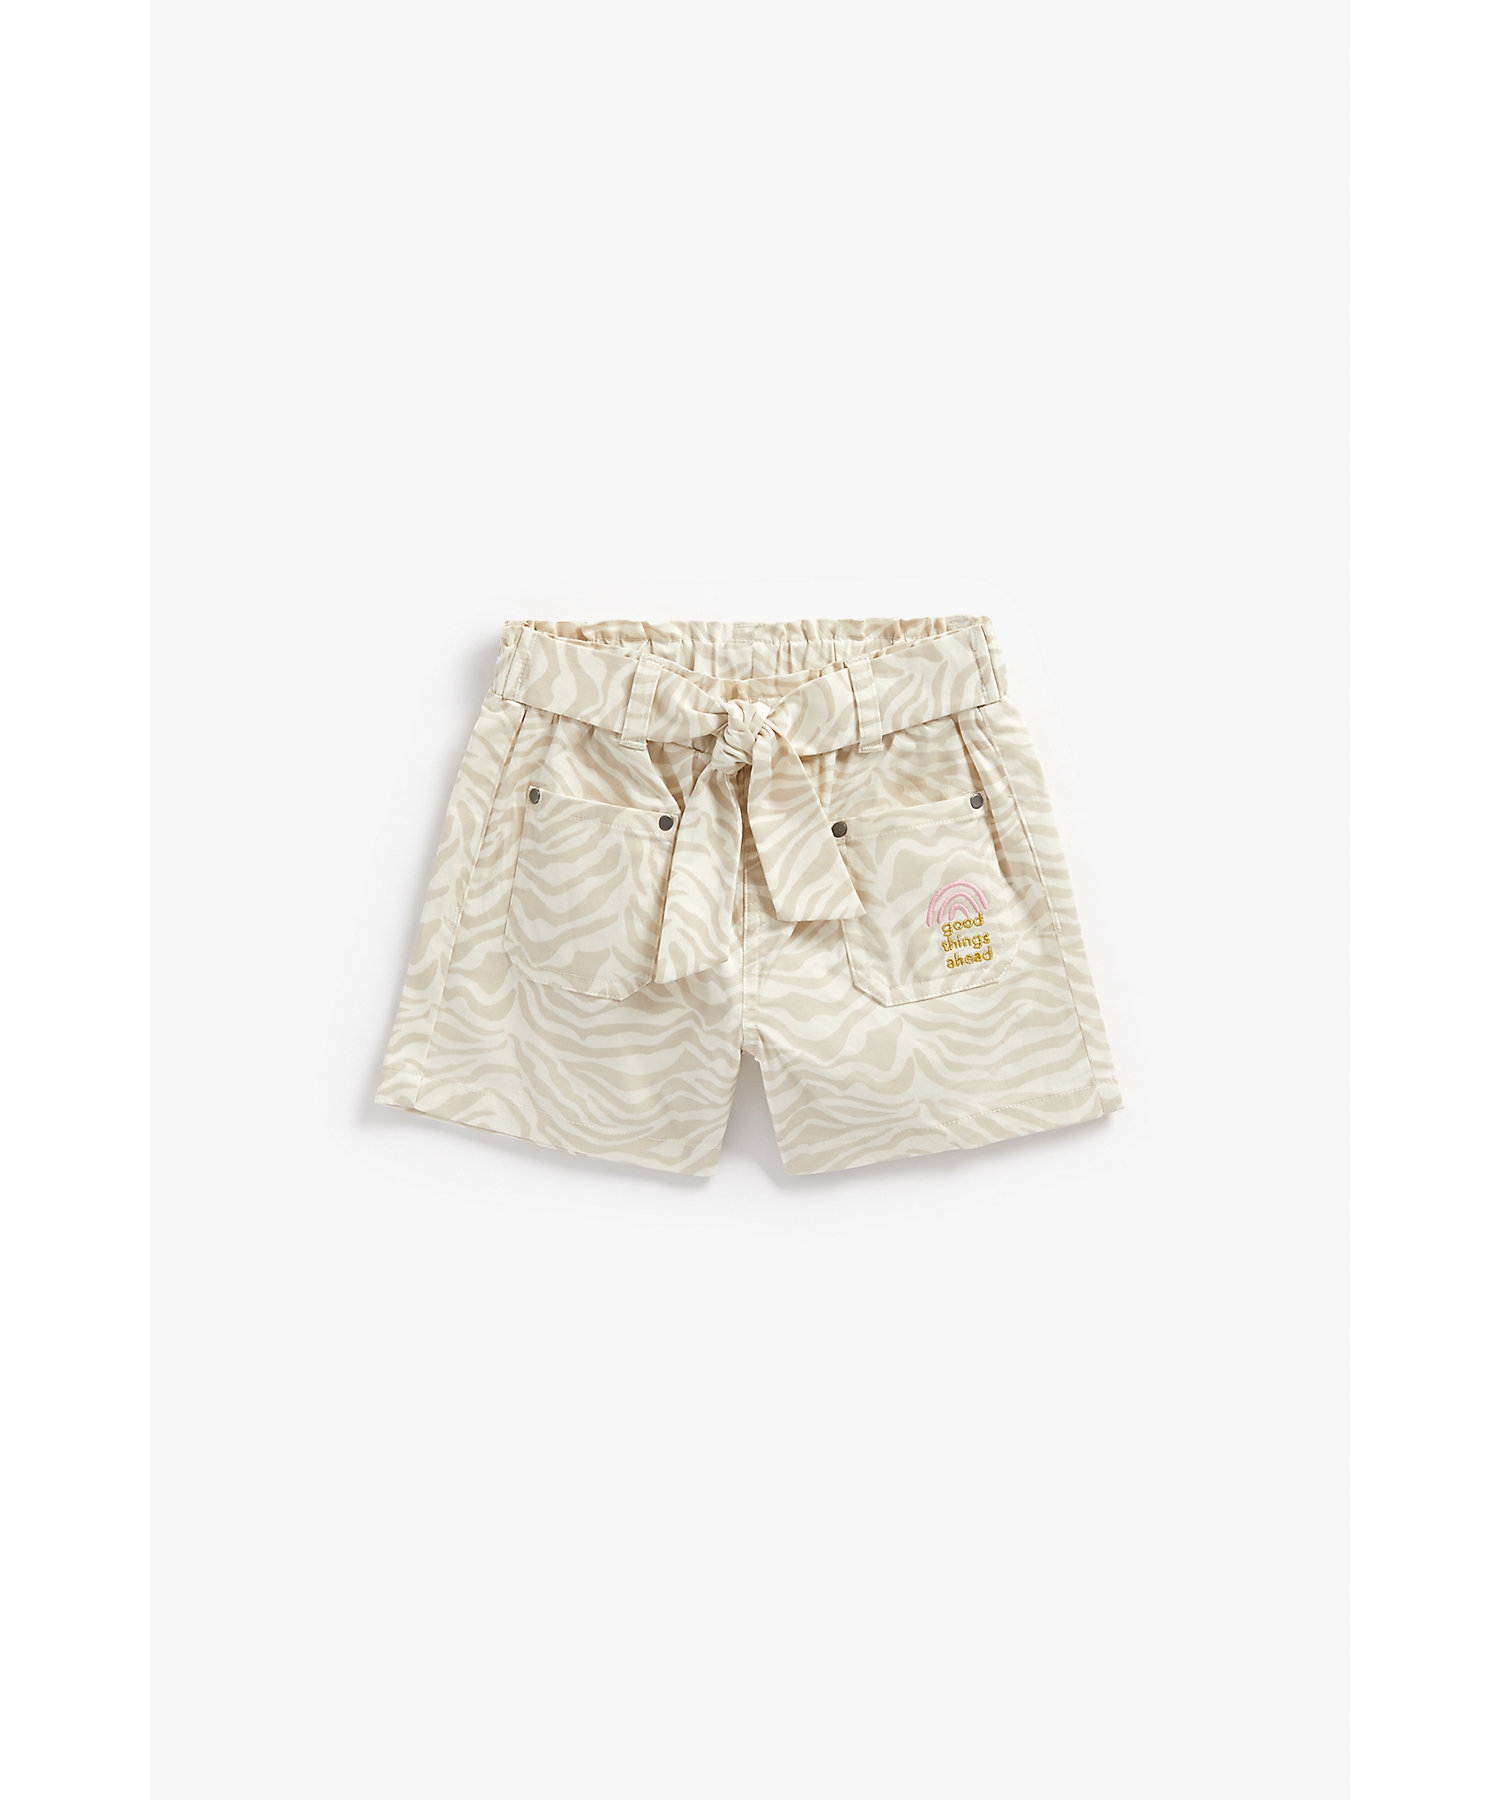 Girls Shorts Striped-Cream